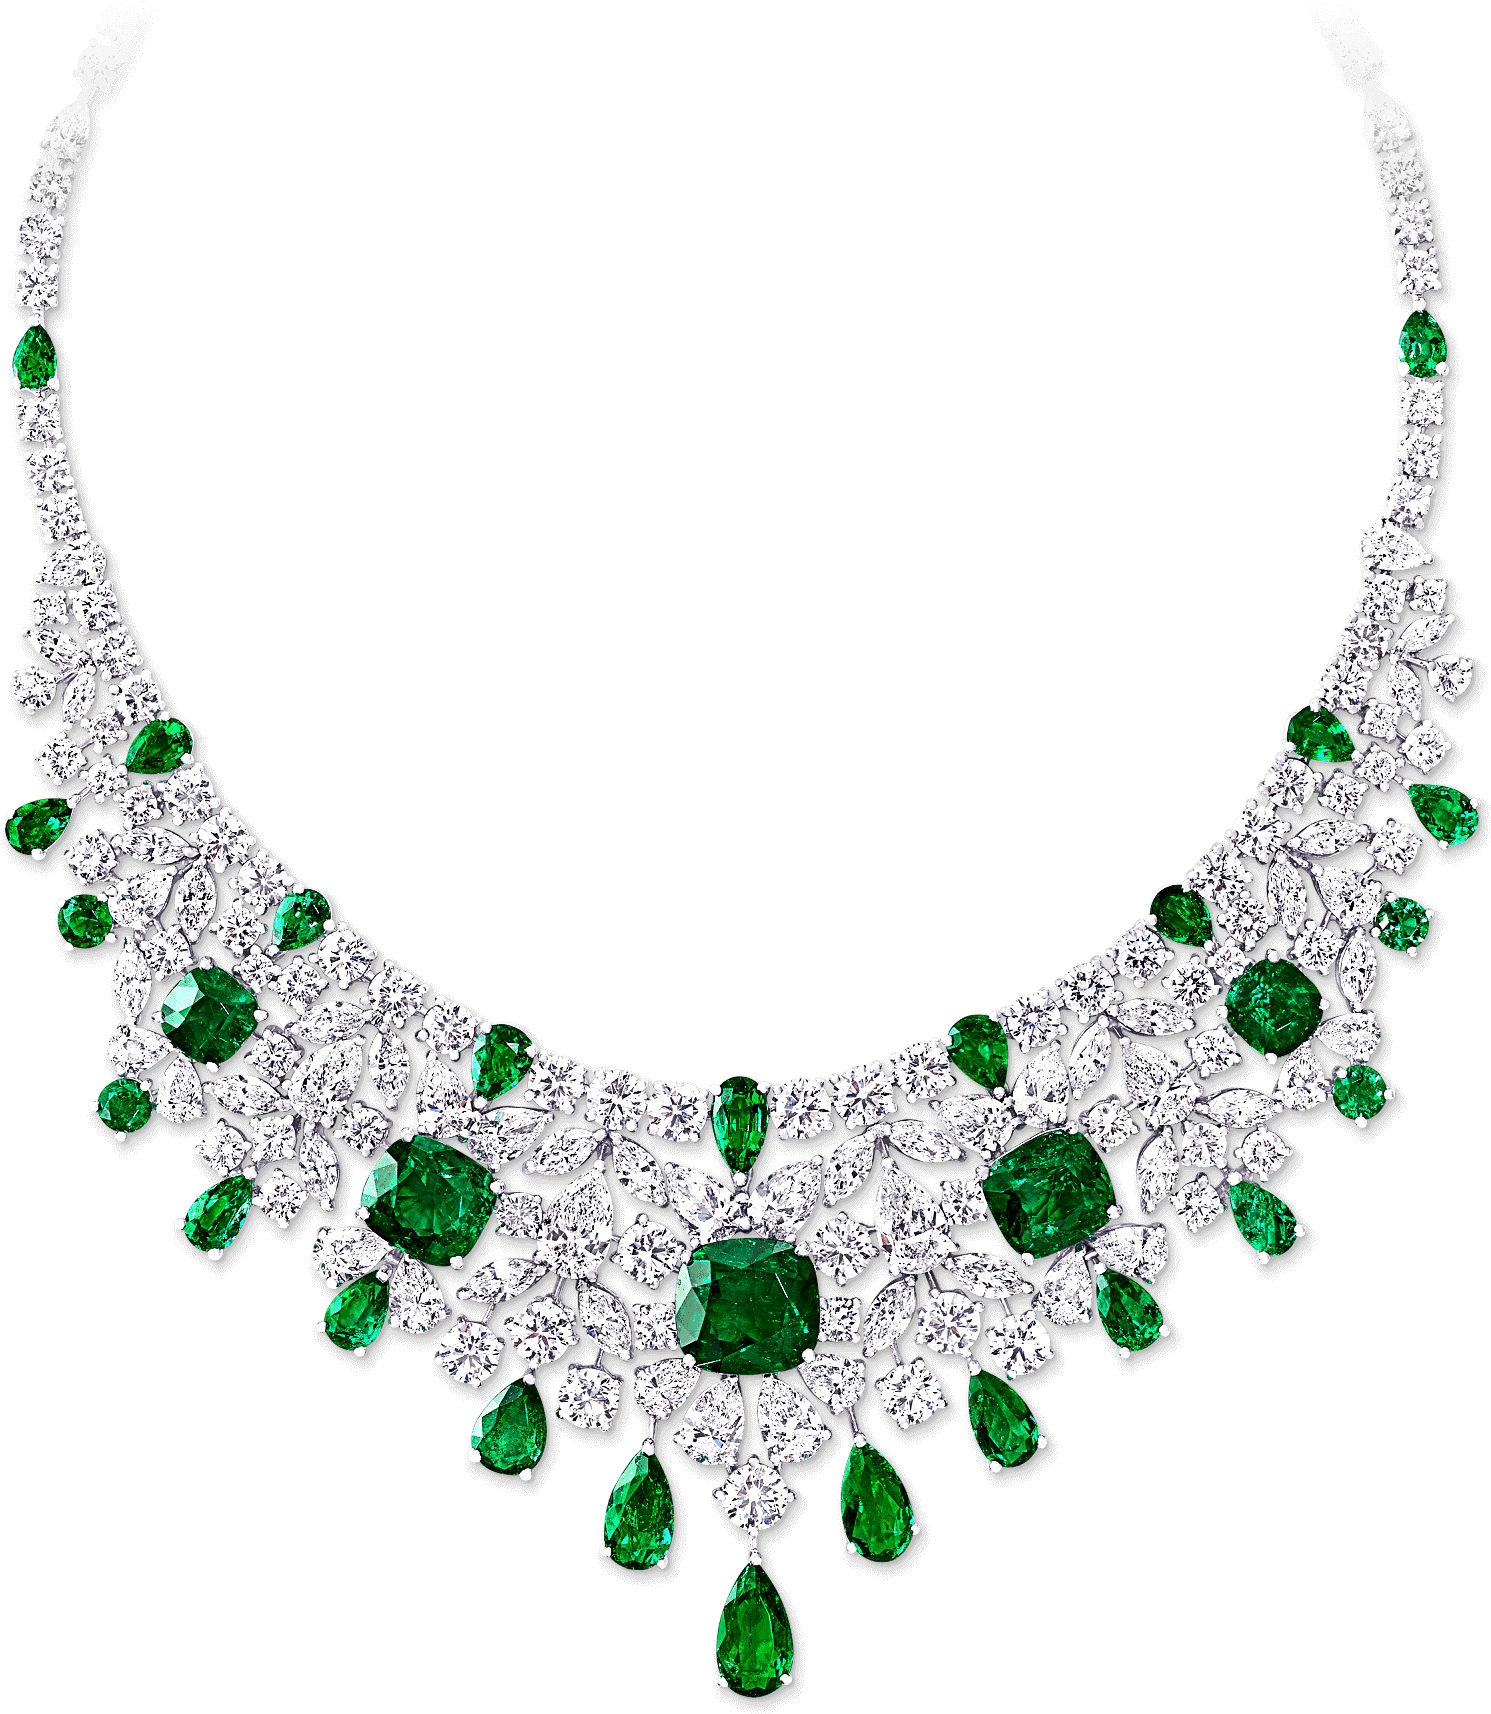 Diamond Necklace Png 1491 X 1714